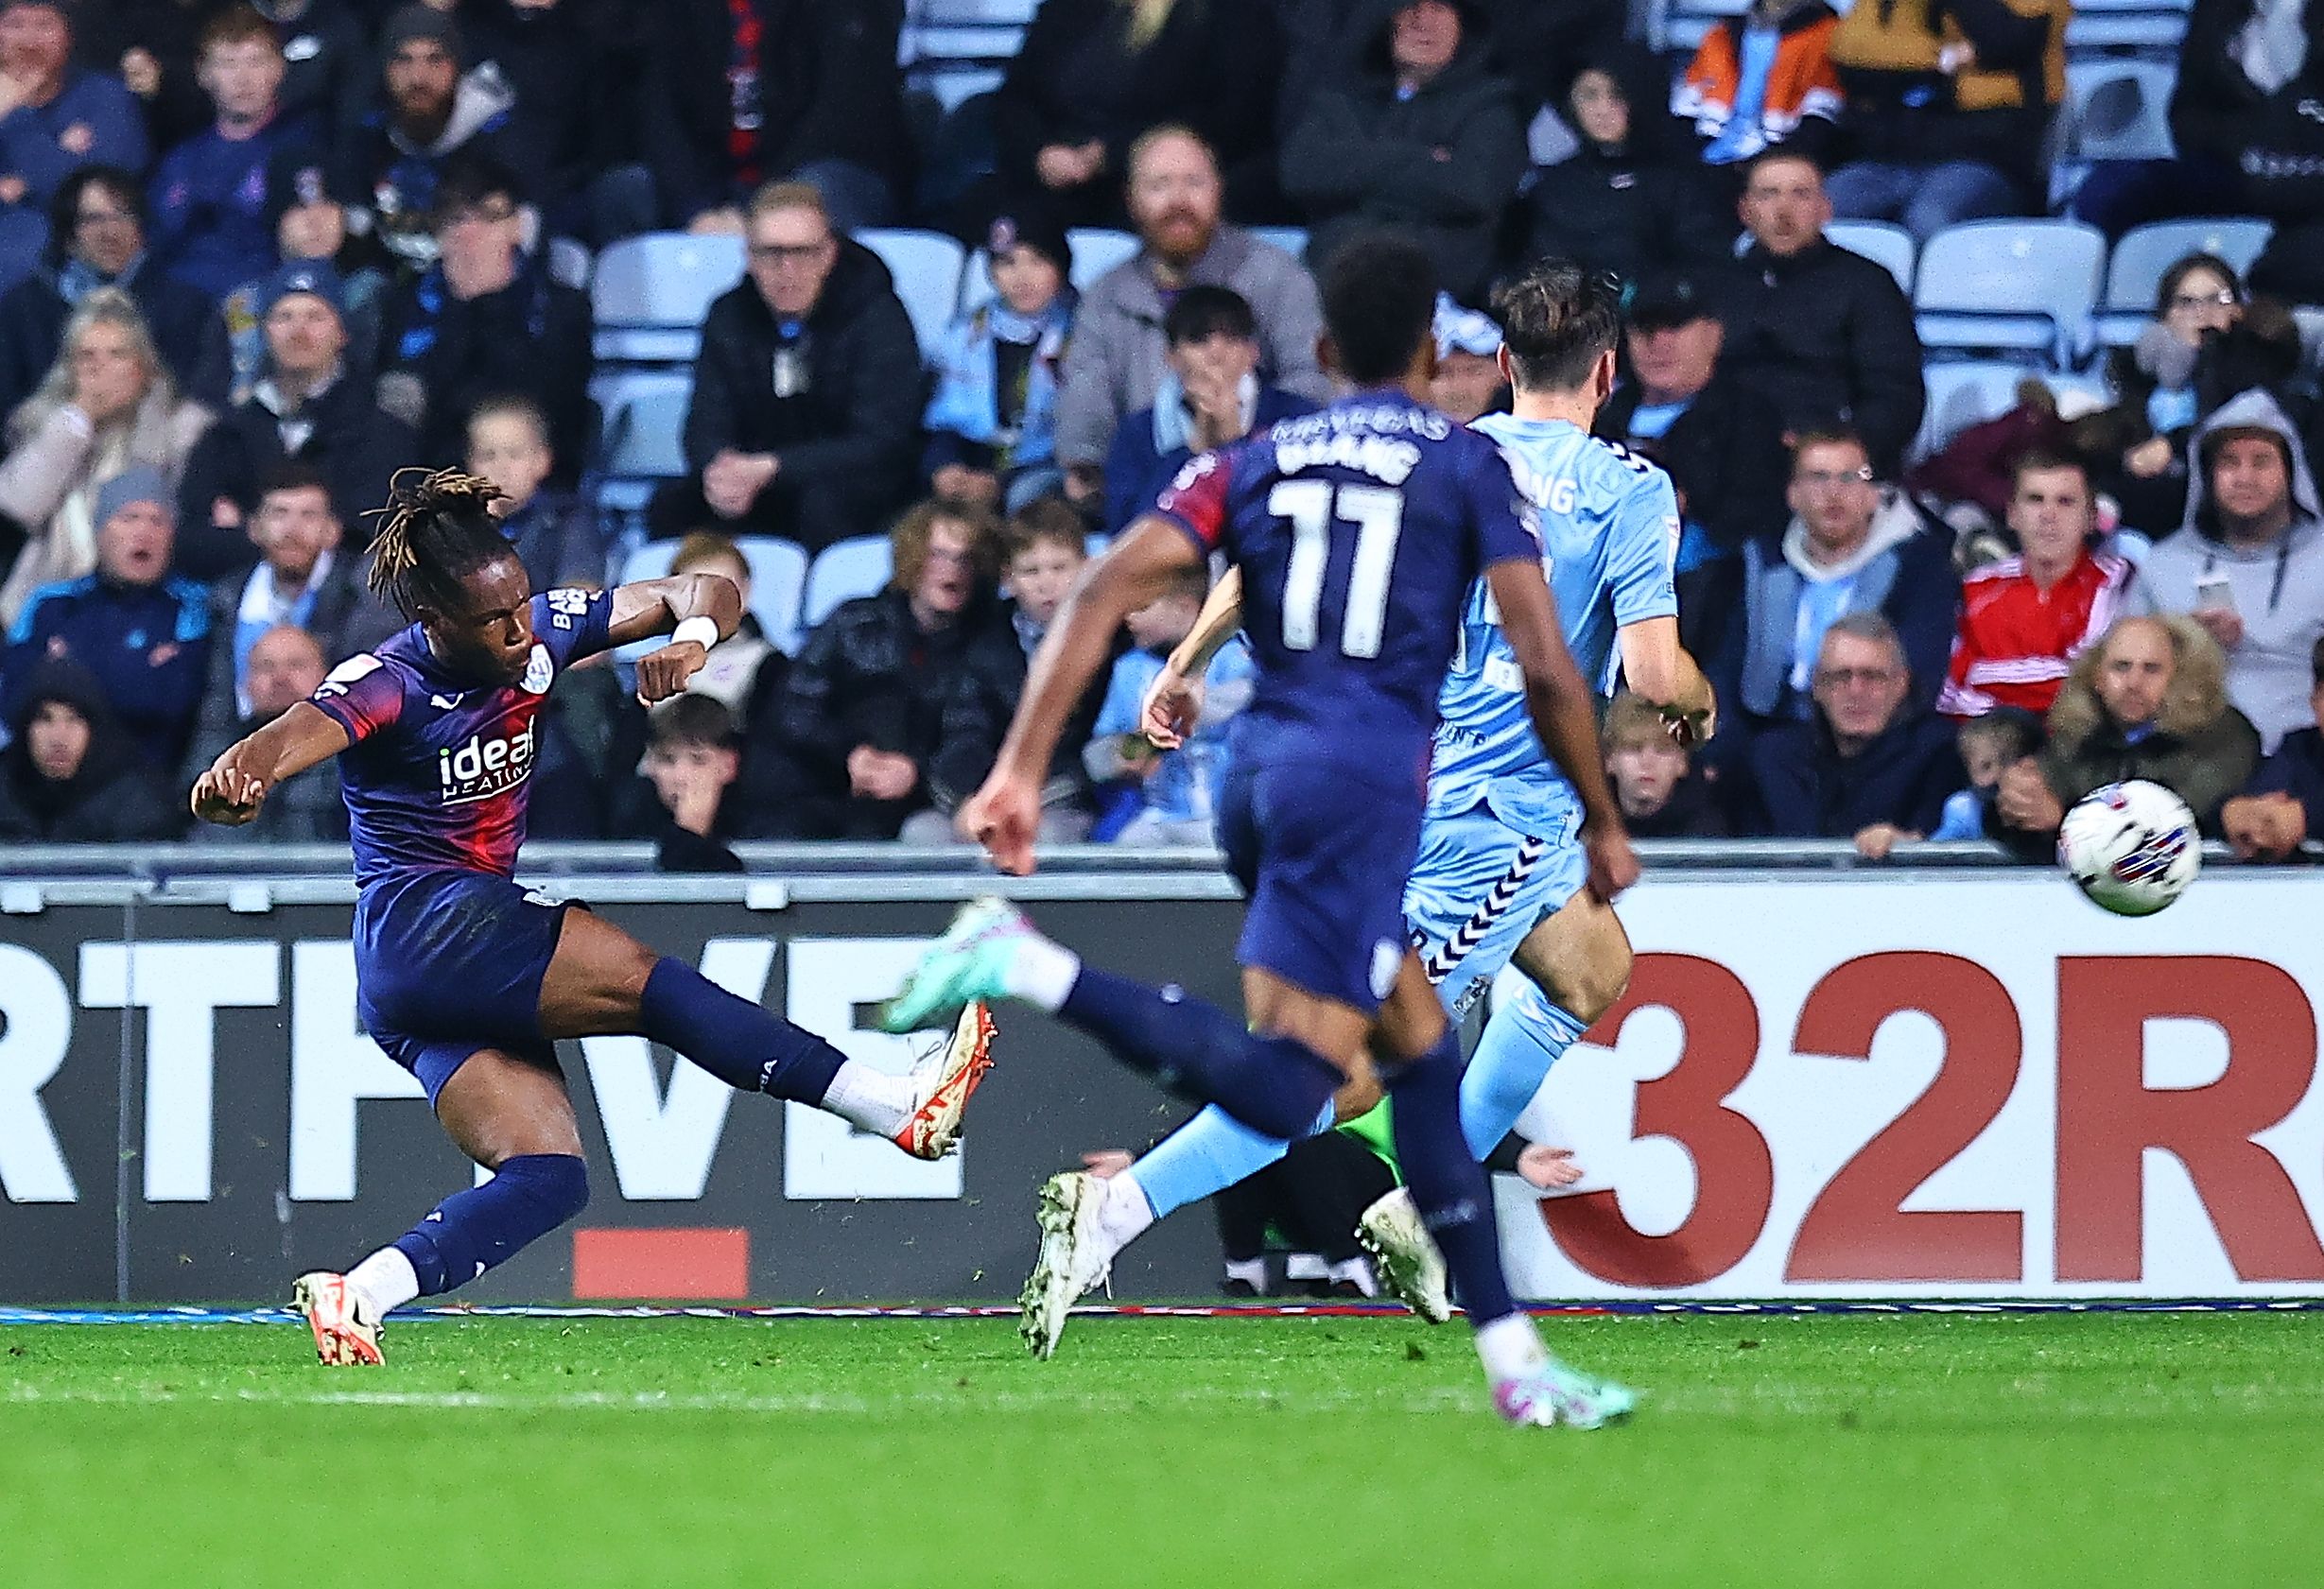 Brandon Thomas-Asante shoots towards goal against Coventry City